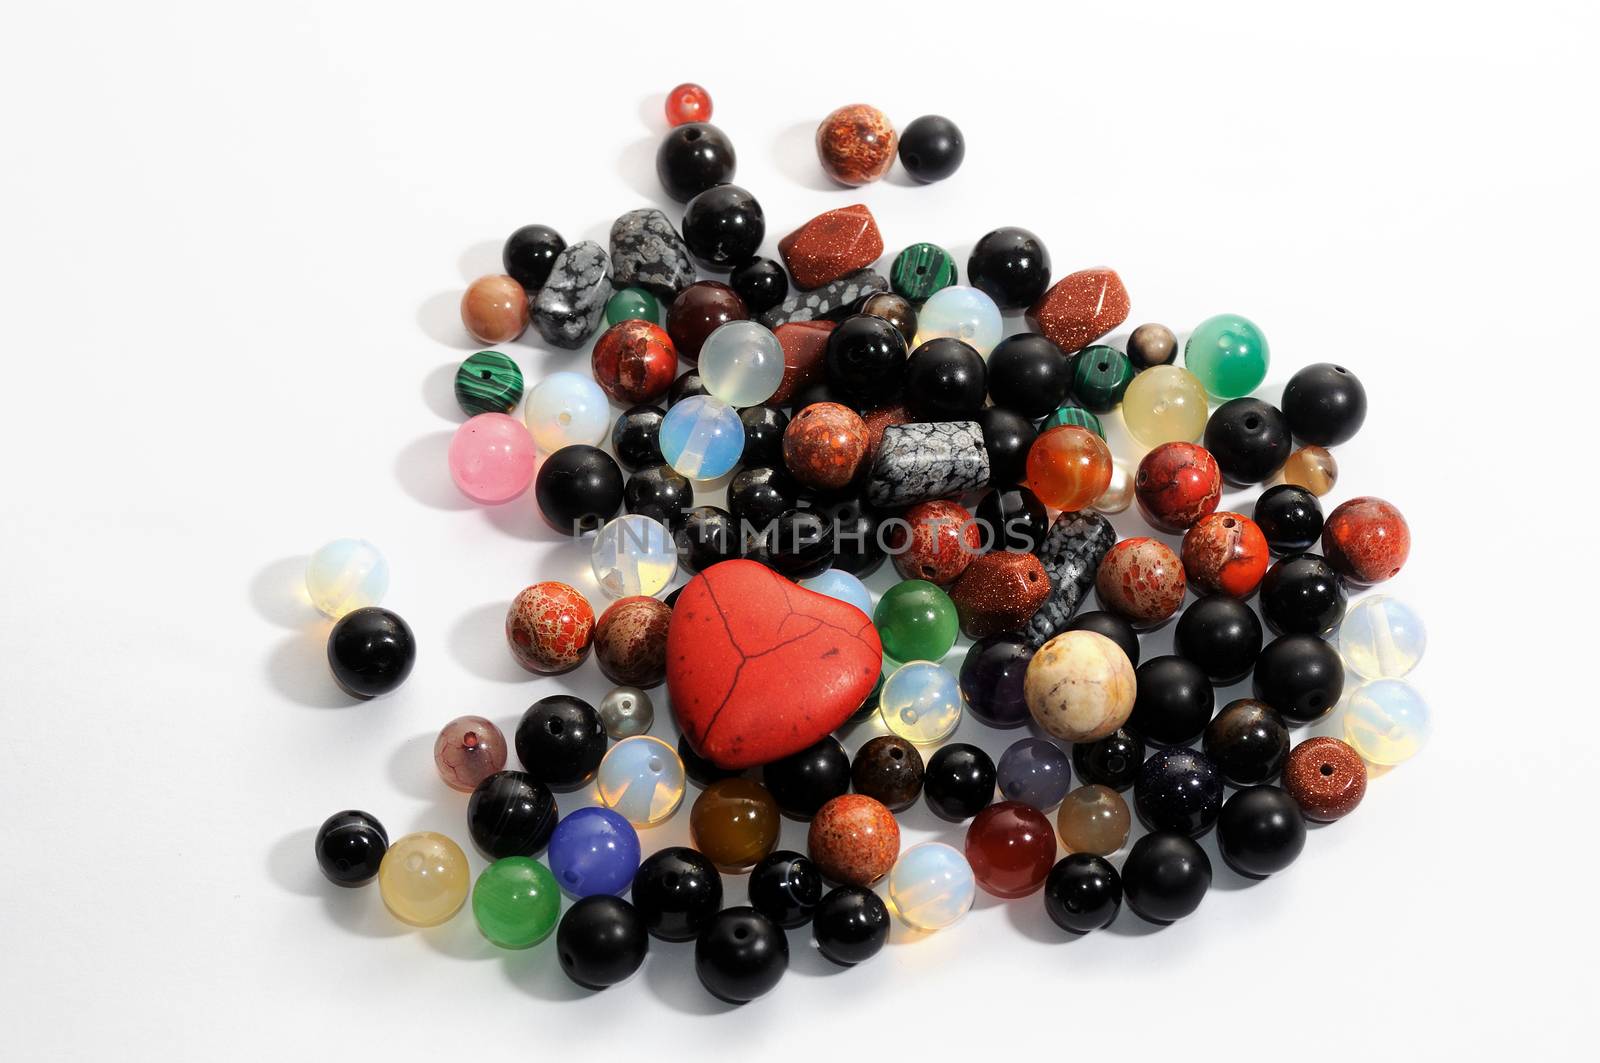 Mix of colorful polished gemstones balls  on the white background.